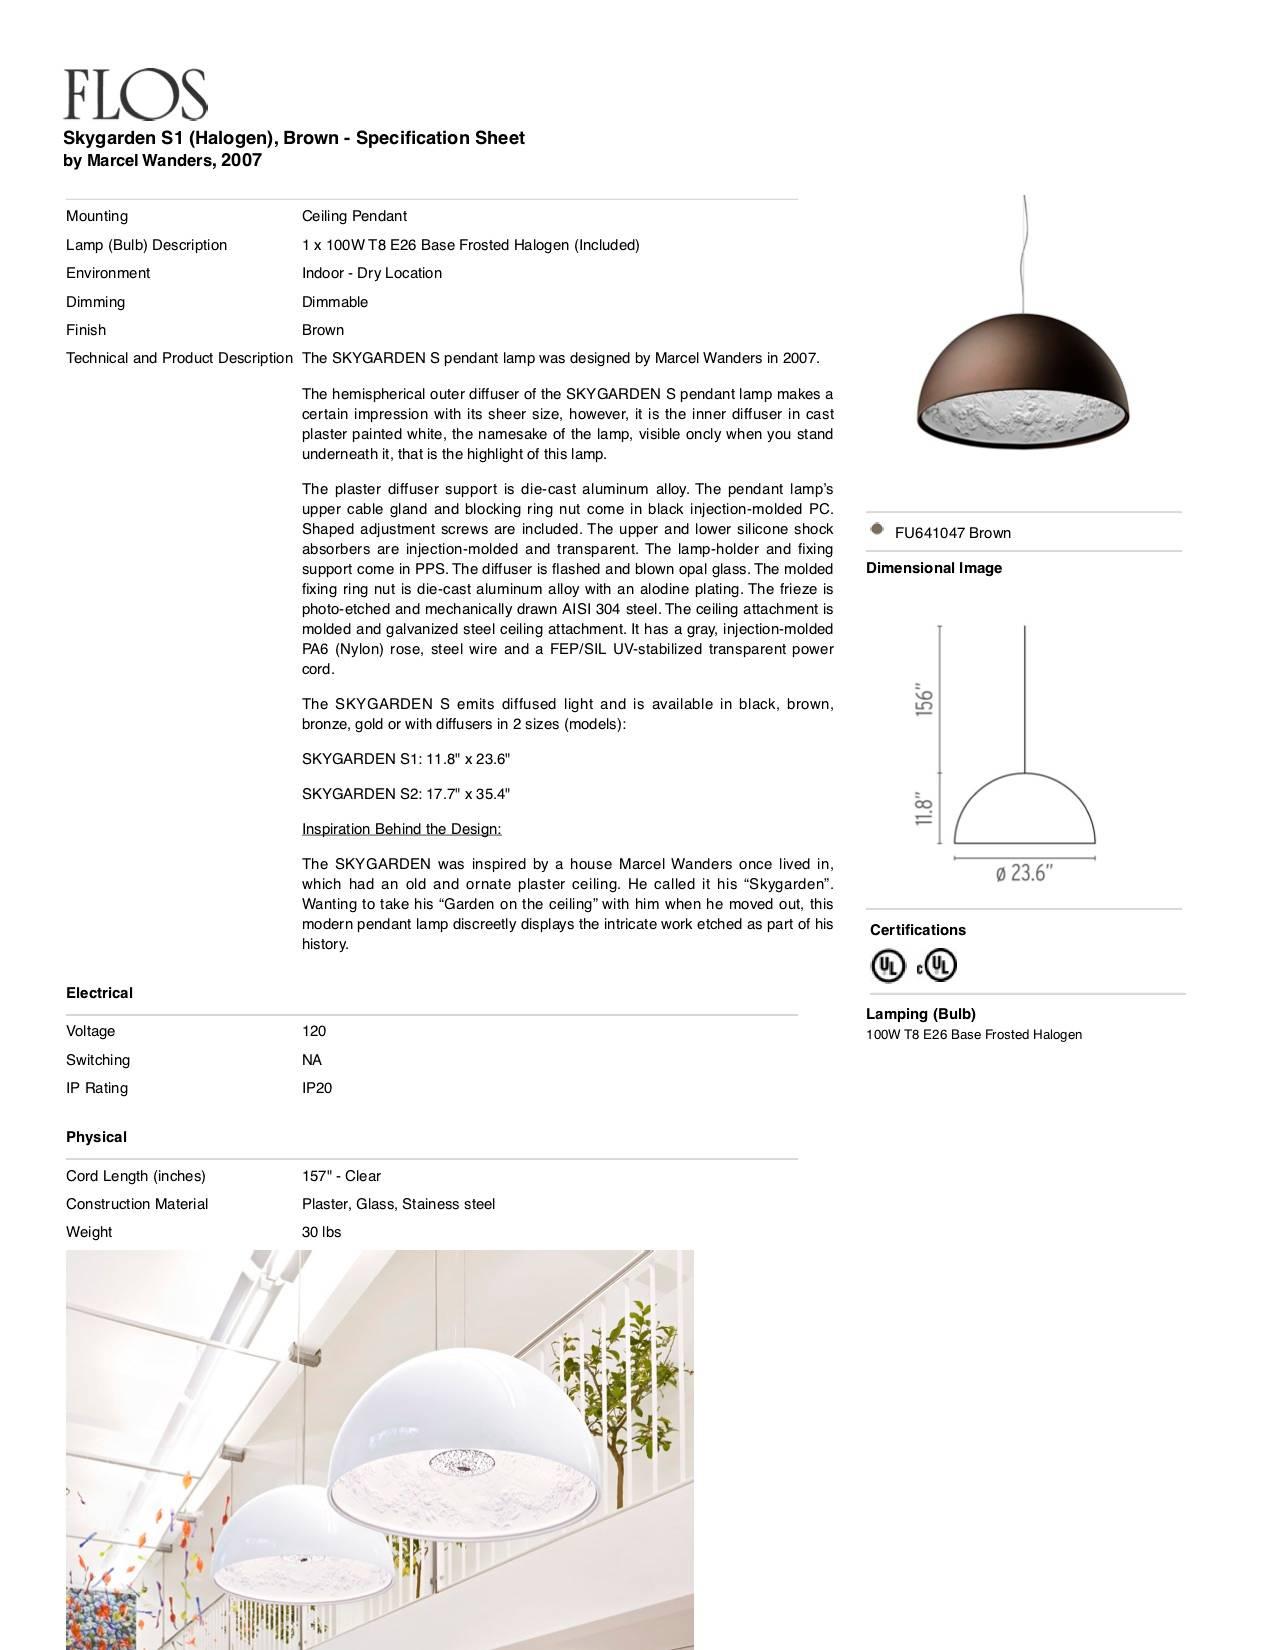 Modern FLOS Skygarden S1 Halogen Pendant Light in Brown by Marcel Wanders For Sale